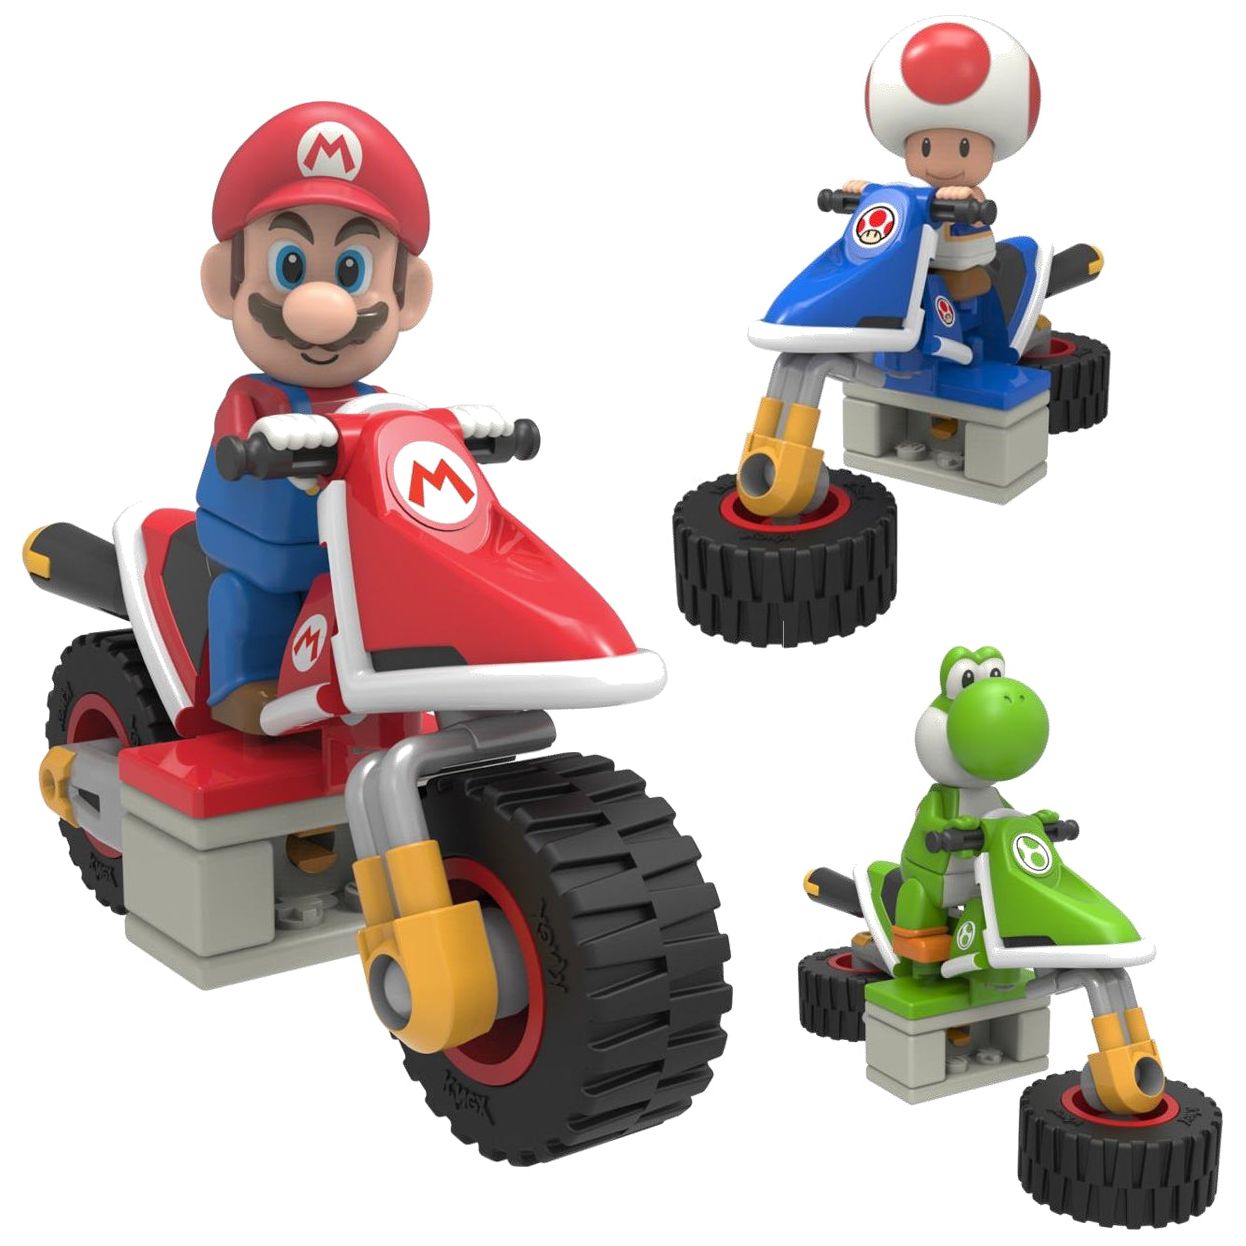 K'NEX Mario Kart 8 Bike Building Set